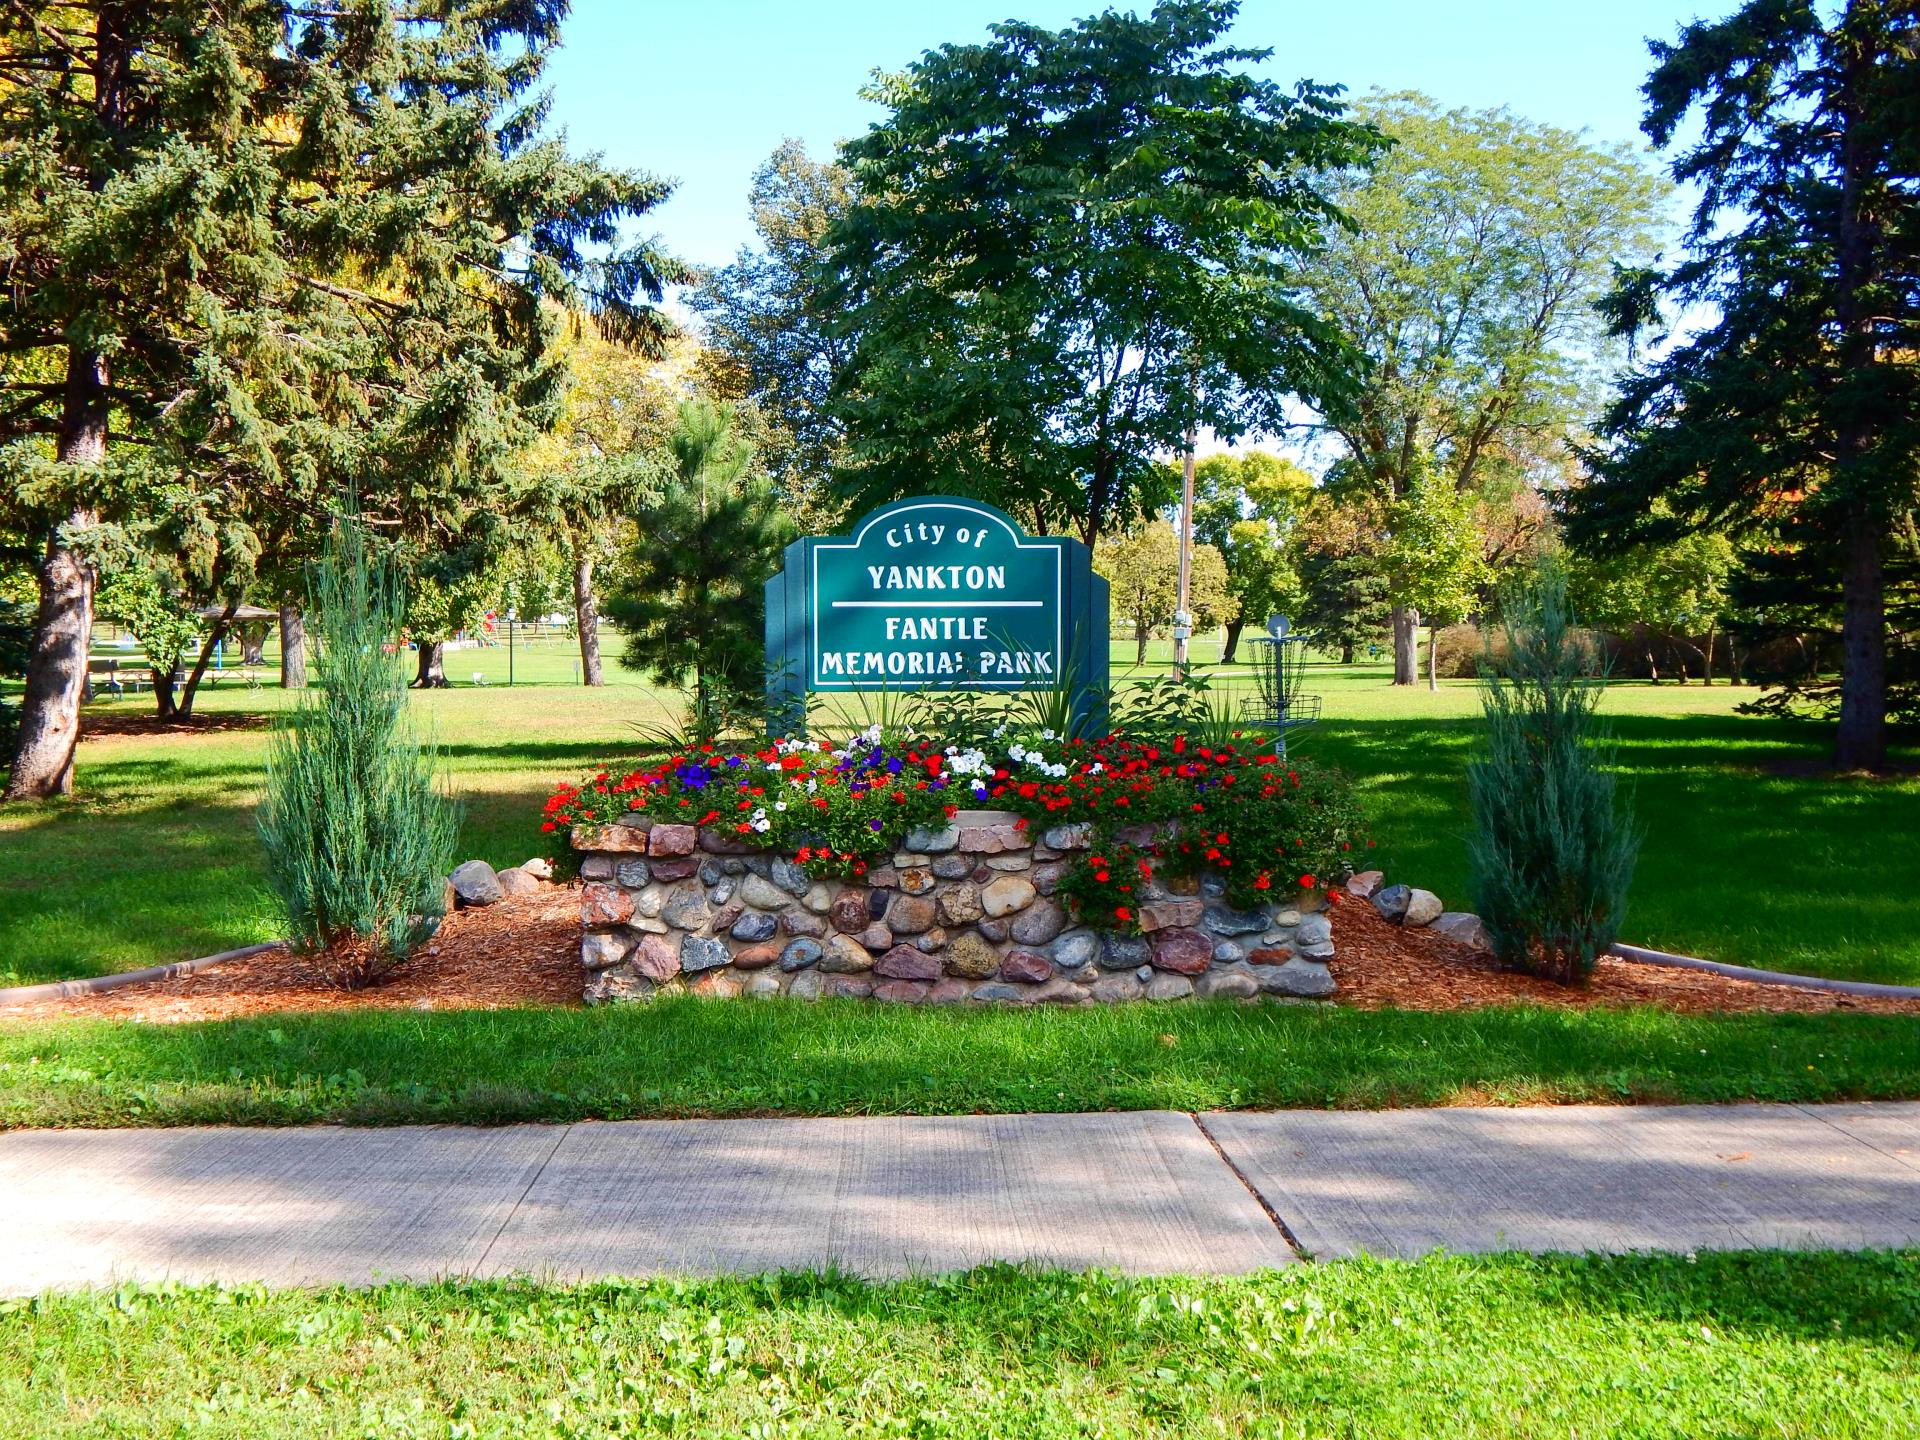 Fantle Memorial Park park sign with flowers